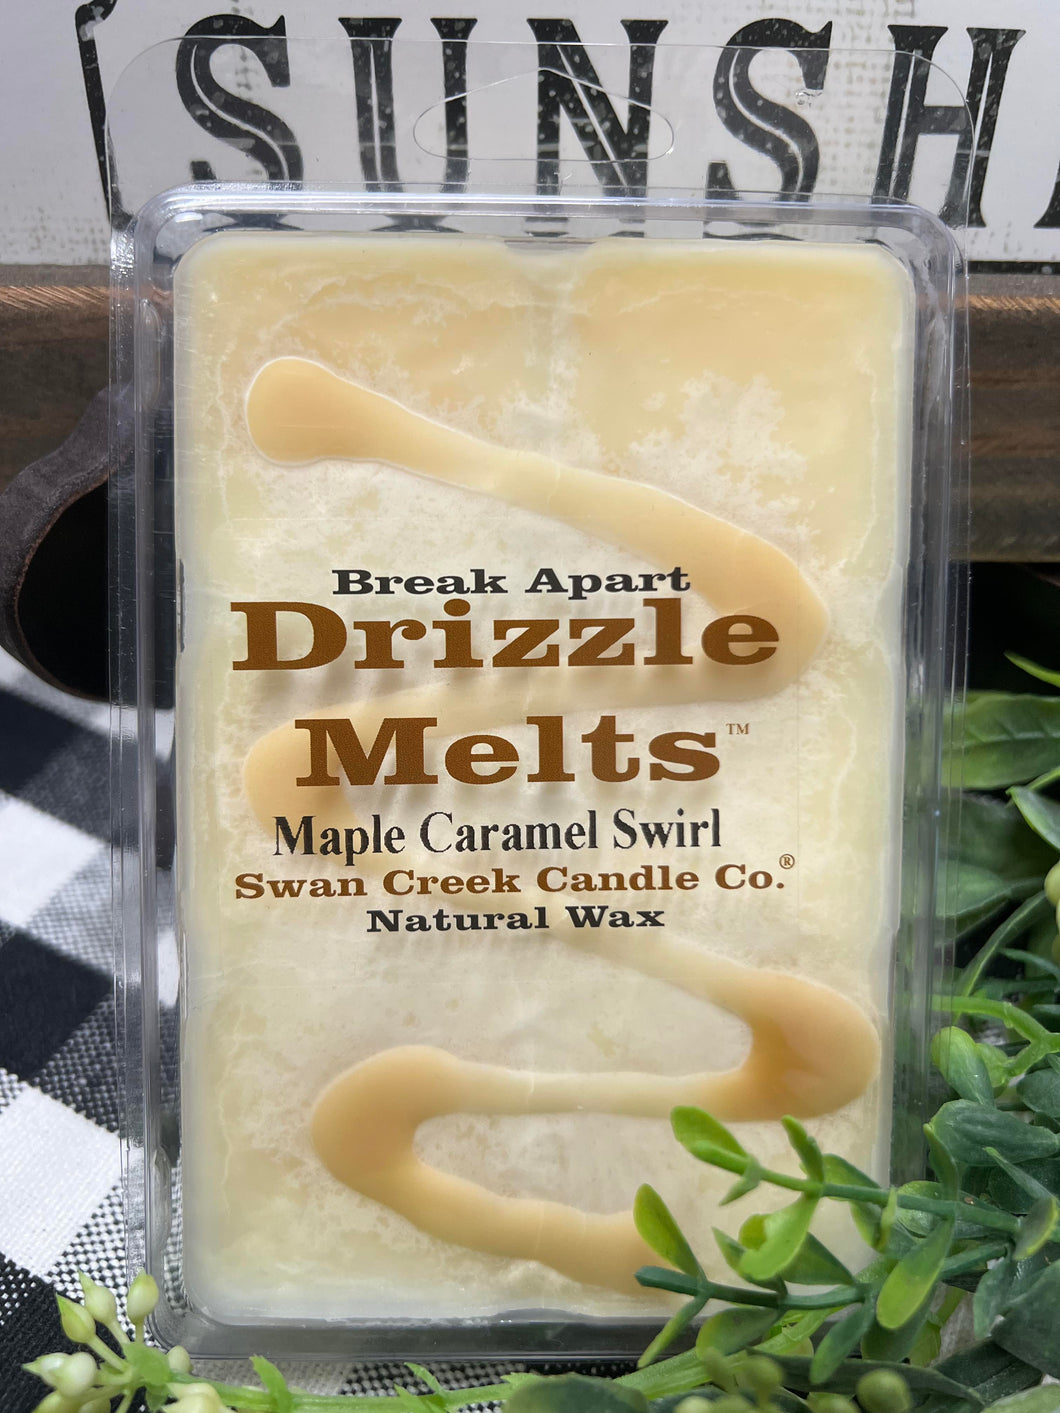 Swan Creek Candle Co. Maple Caramel Swirl Drizzle Melts